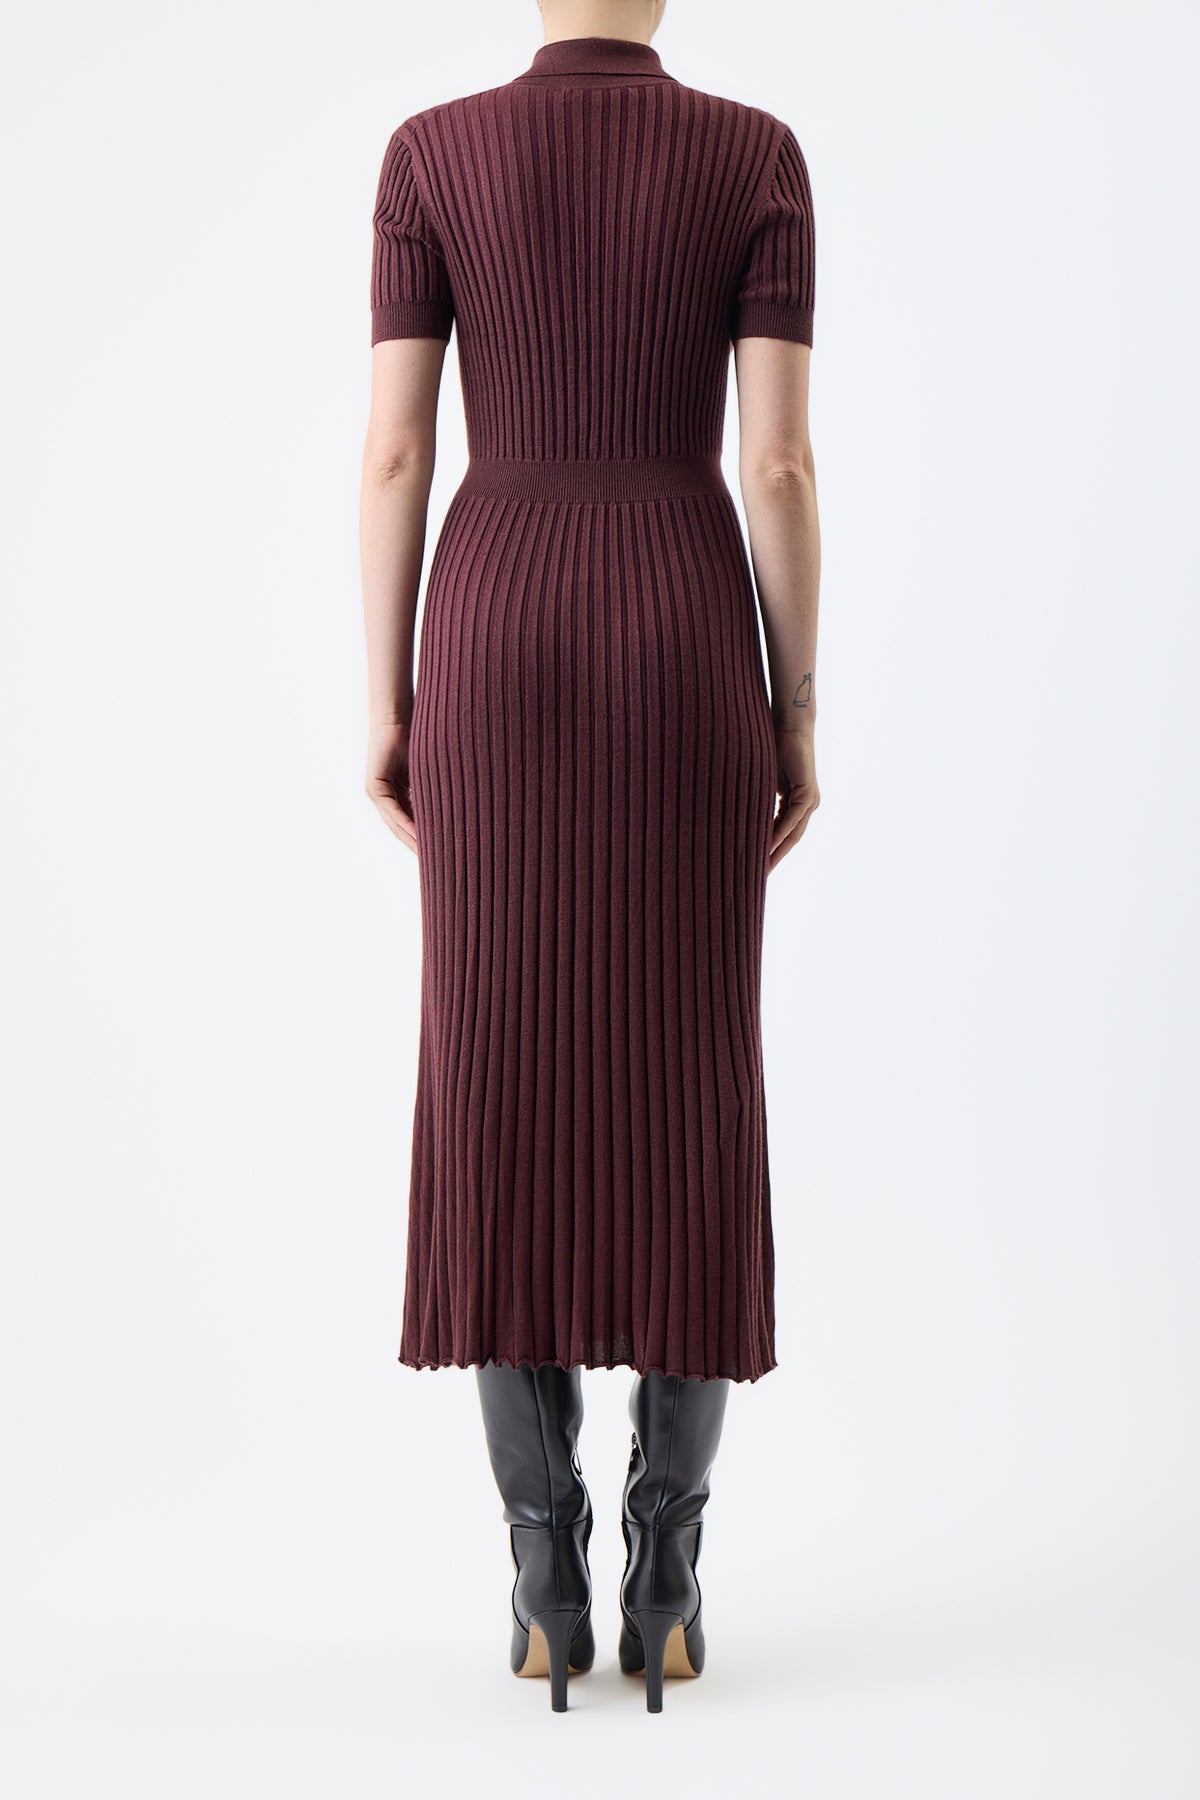 Amor Knit Dress in Deep Bordeaux Cashmere Silk